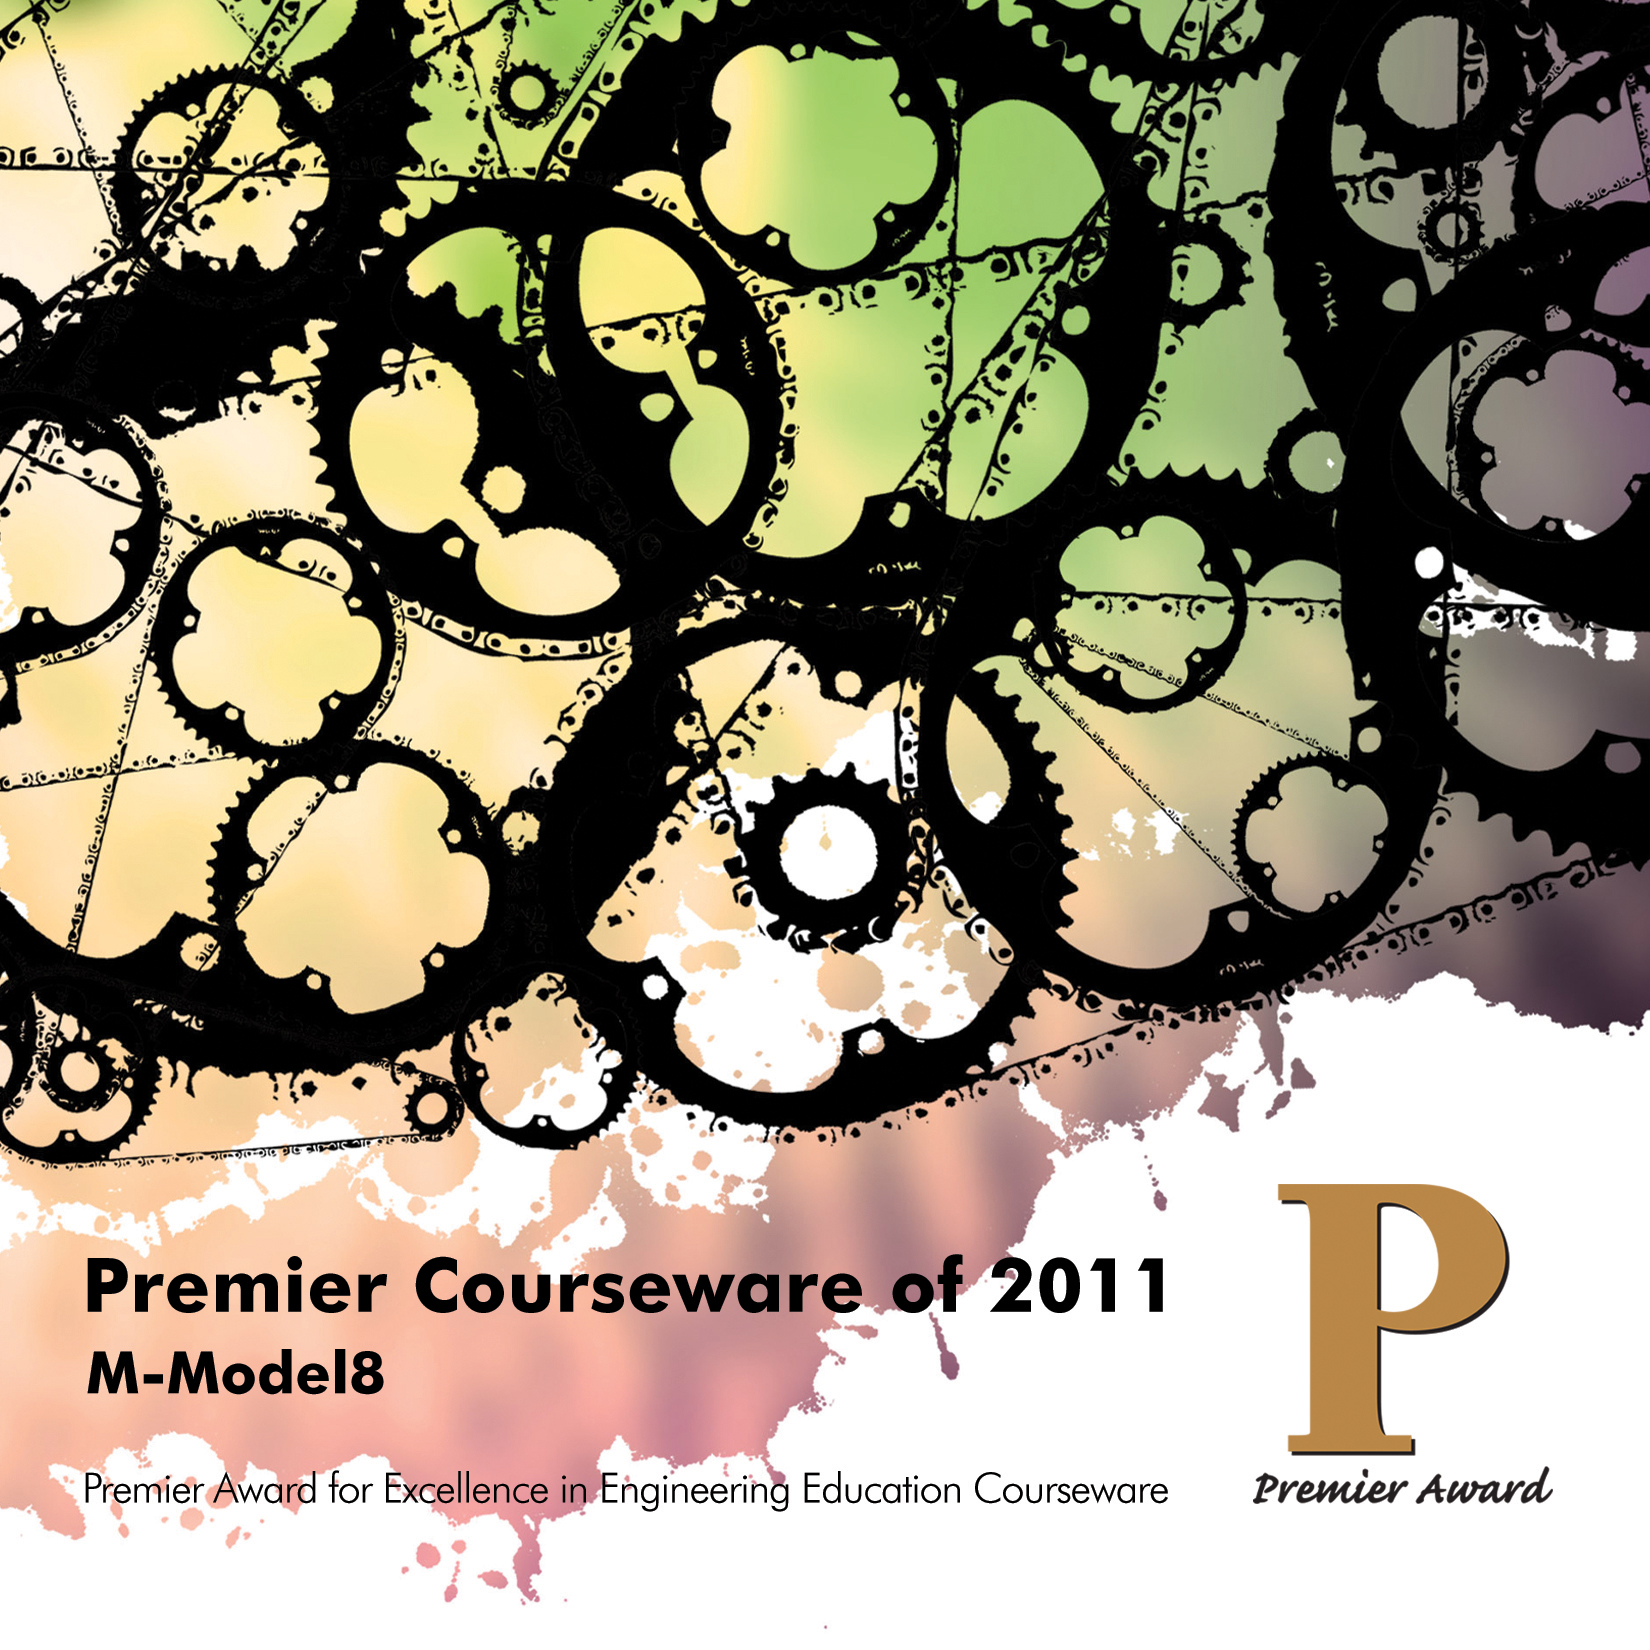 Premier Courseware of 2011